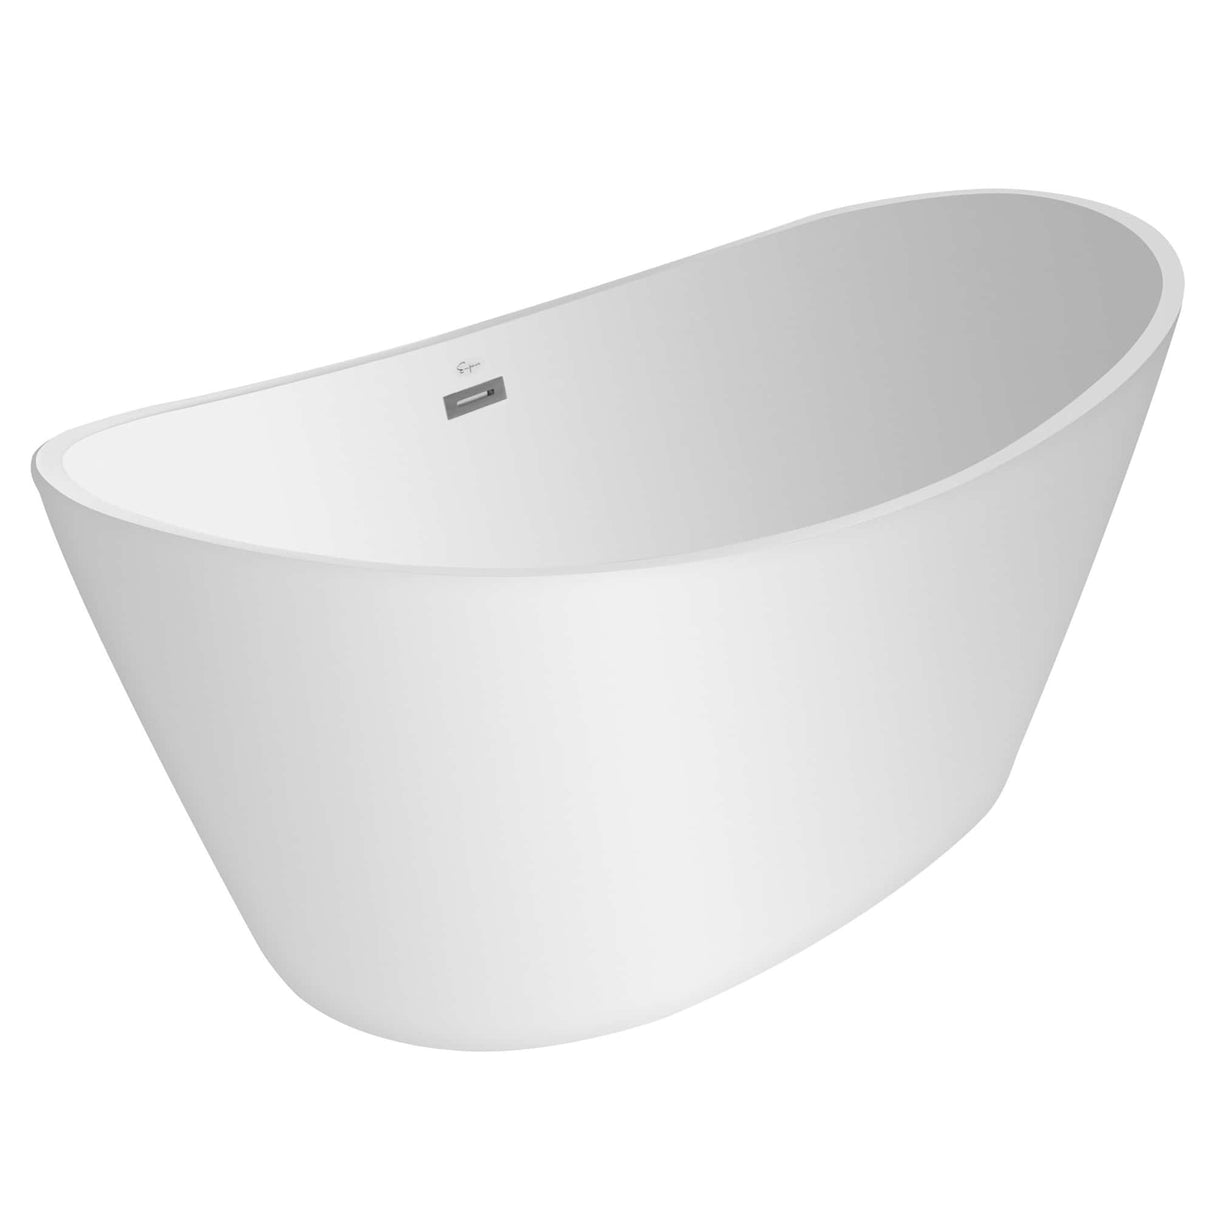 Empava-67FT1518 luxury freestanding acrylic soaking oval modern double-ended bathtub over flow